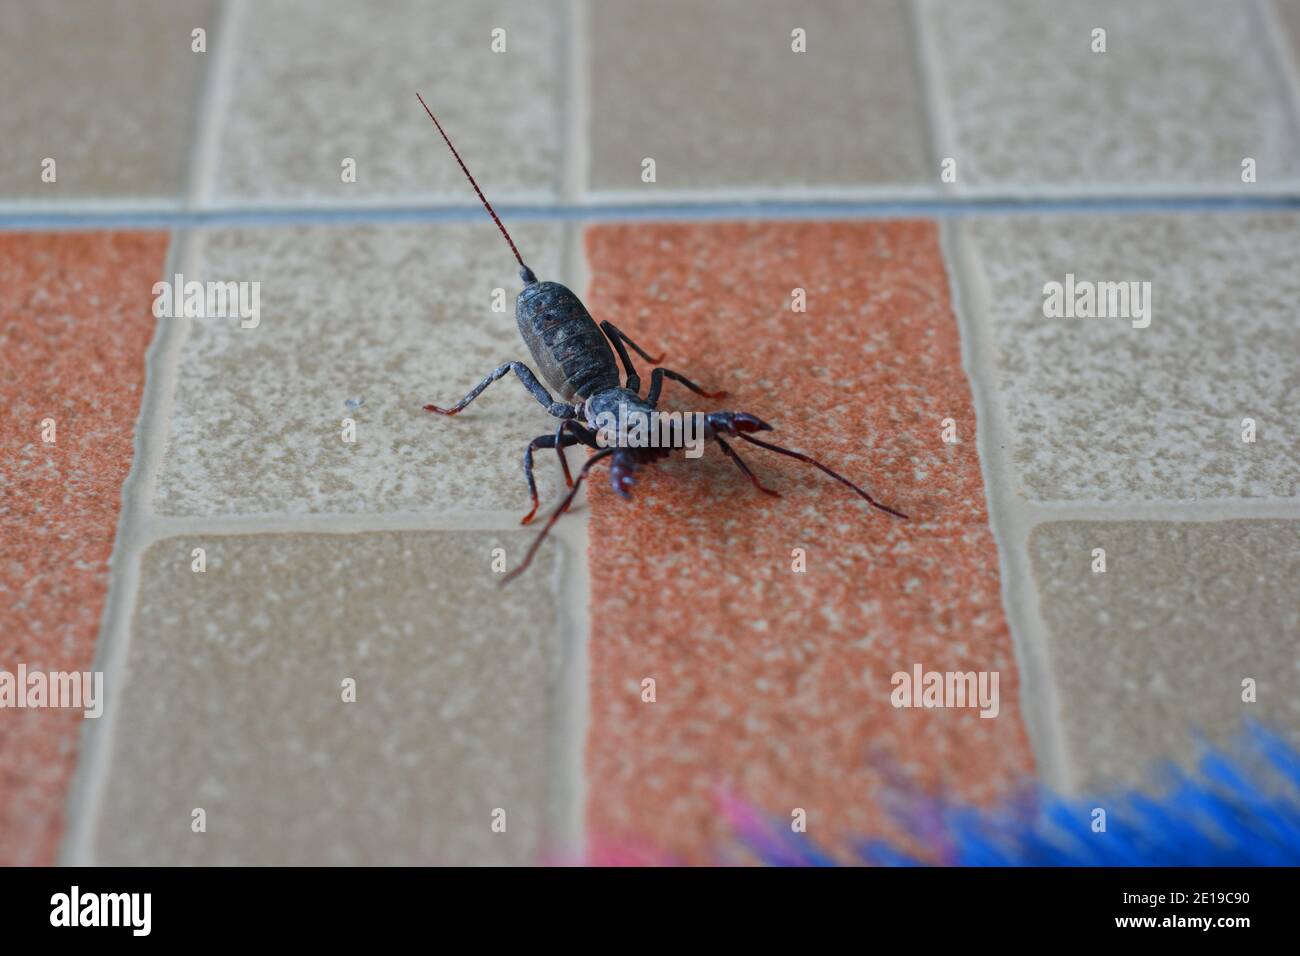 whip scorpion crawling on floor tiles Stock Photo